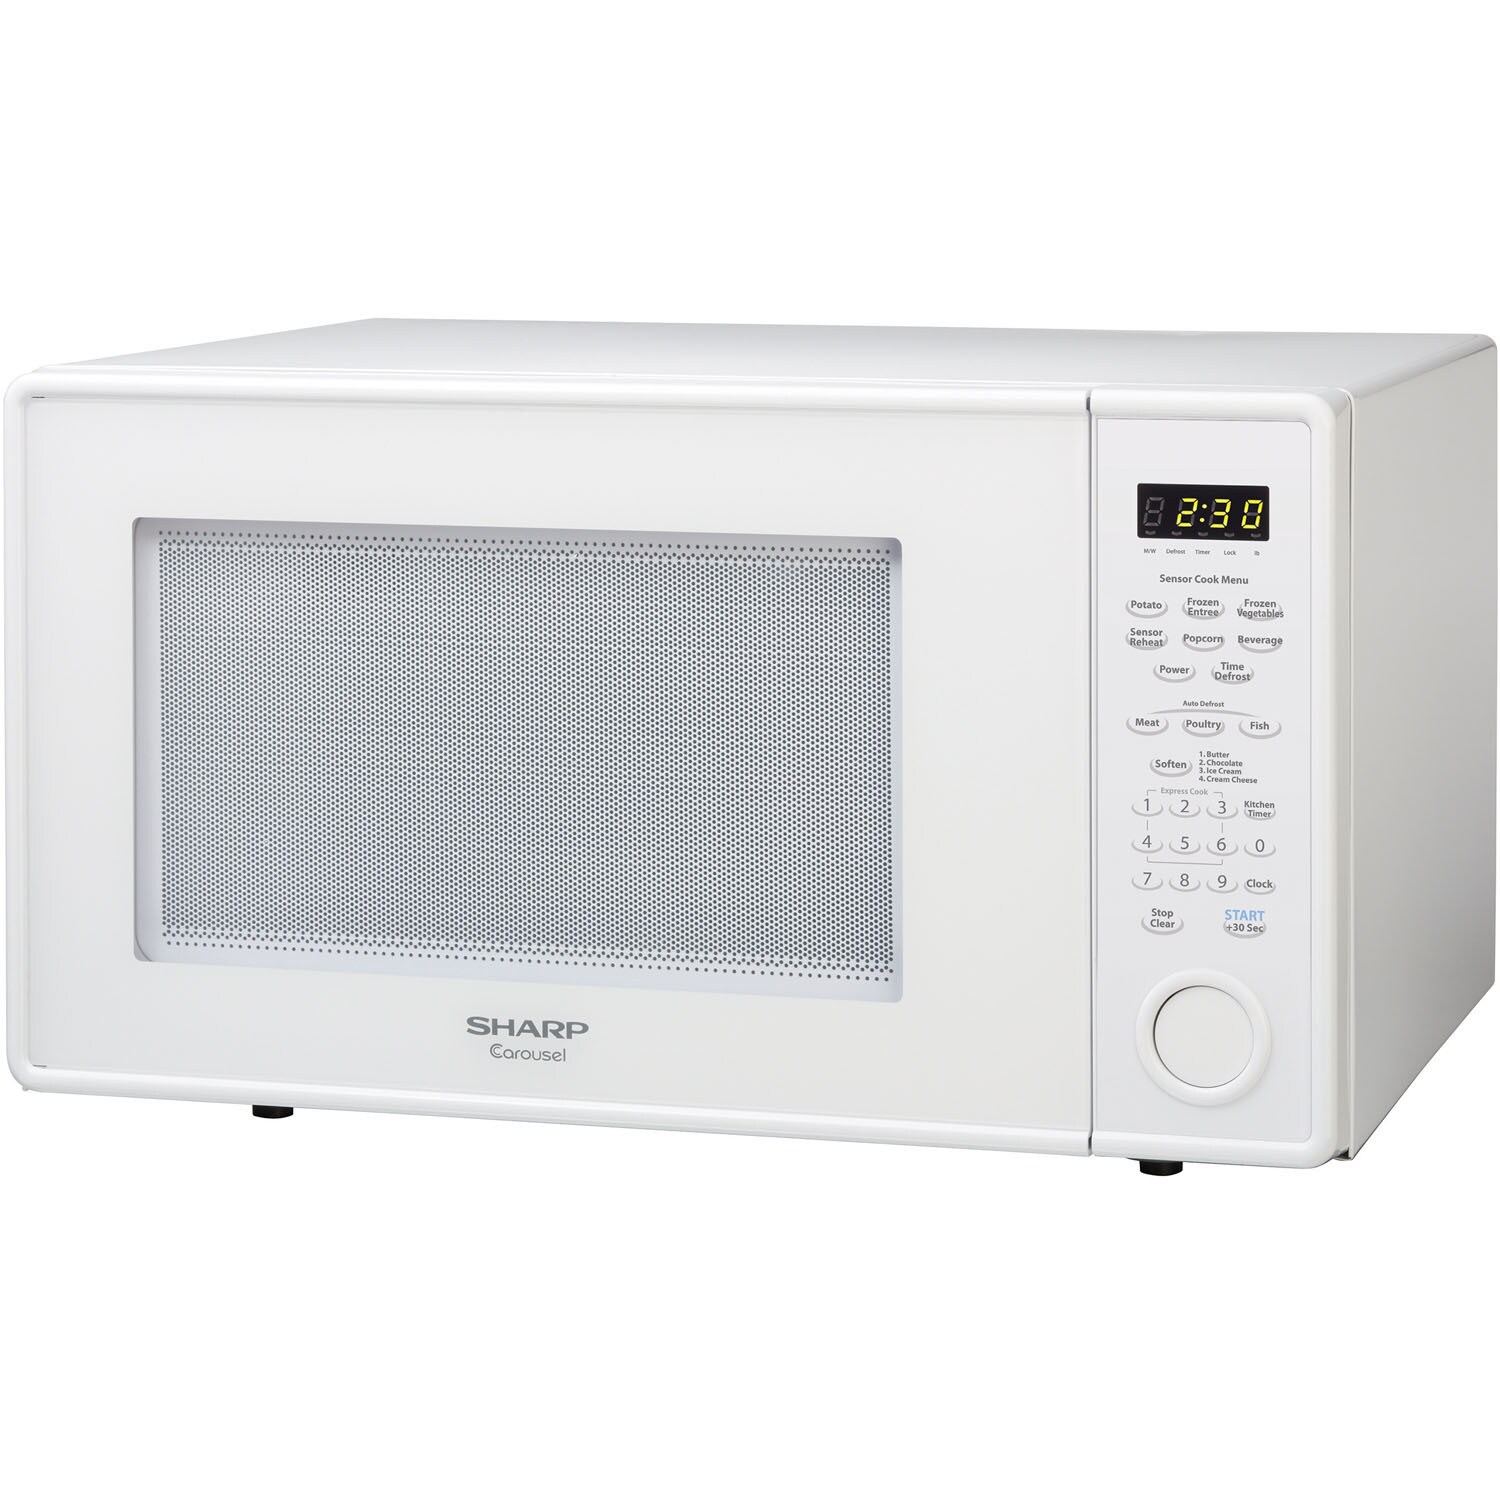 https://ak1.ostkcdn.com/images/products/12099110/Sharp-Carousel-1.8-Cu.-Ft.-1100W-Countertop-Microwave-Oven-White-f57cd040-4e73-4f7c-9d3c-993de607e39e.jpg